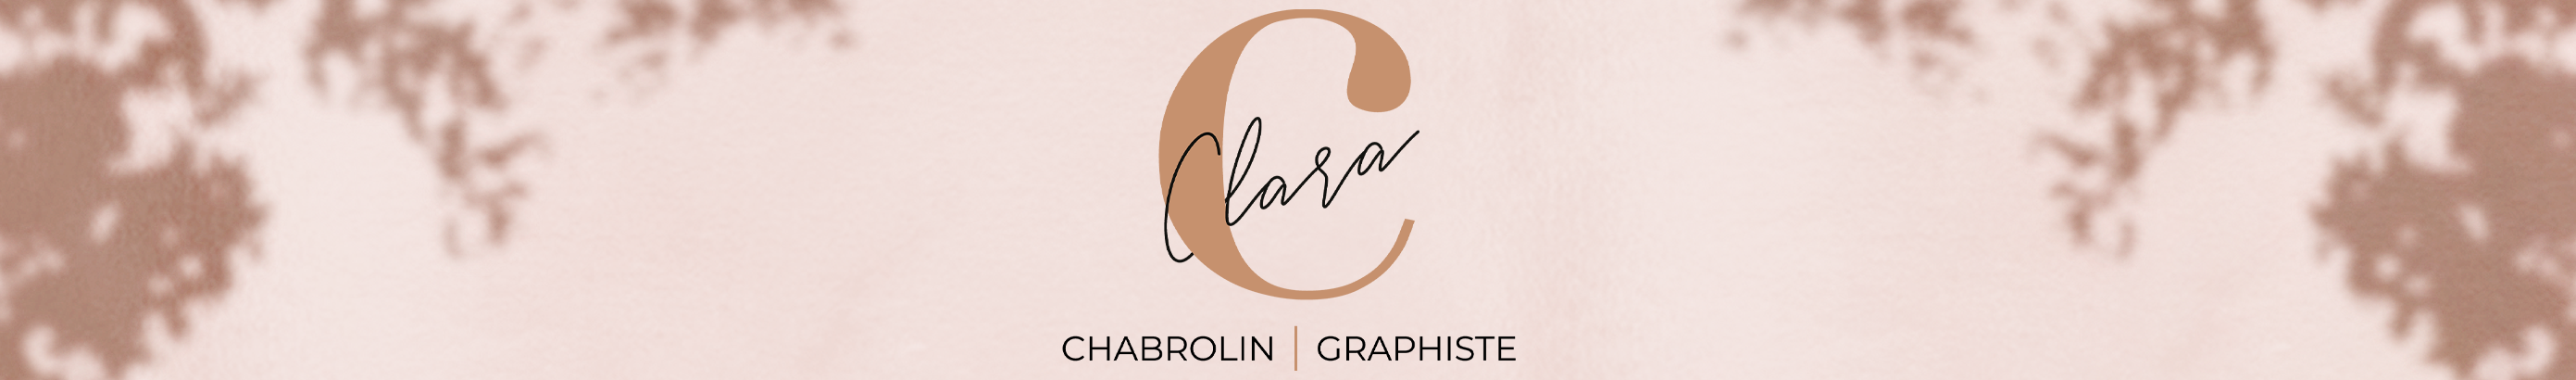 Banner de perfil de Clara Chabrolin